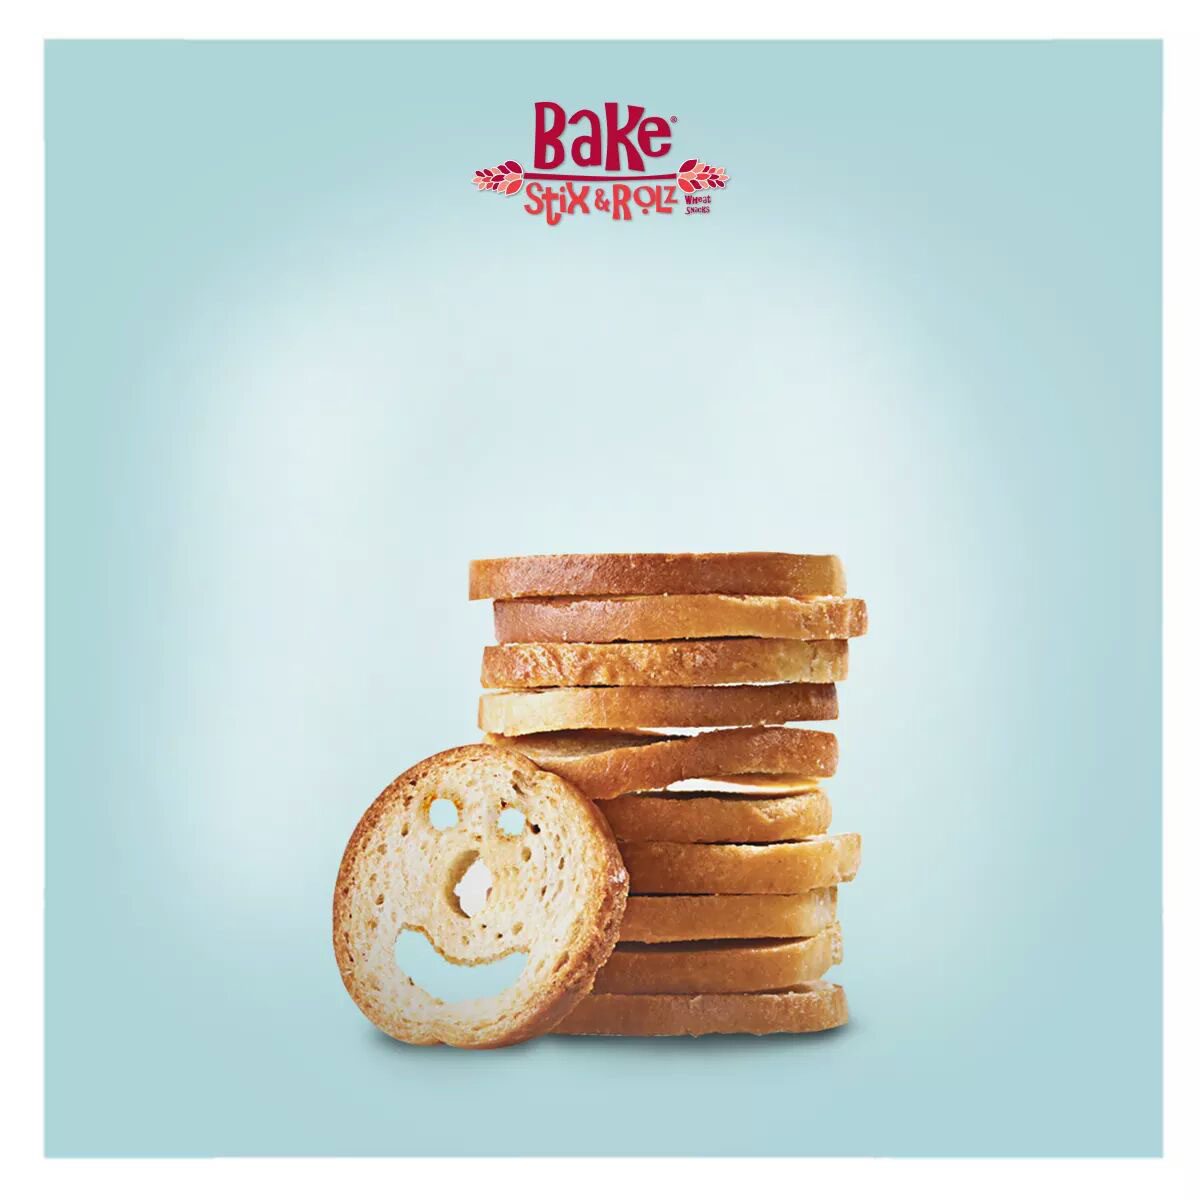 Bake Rolls artwork hamdy elkhmary design branding  macking products adida gfx sanks snacks